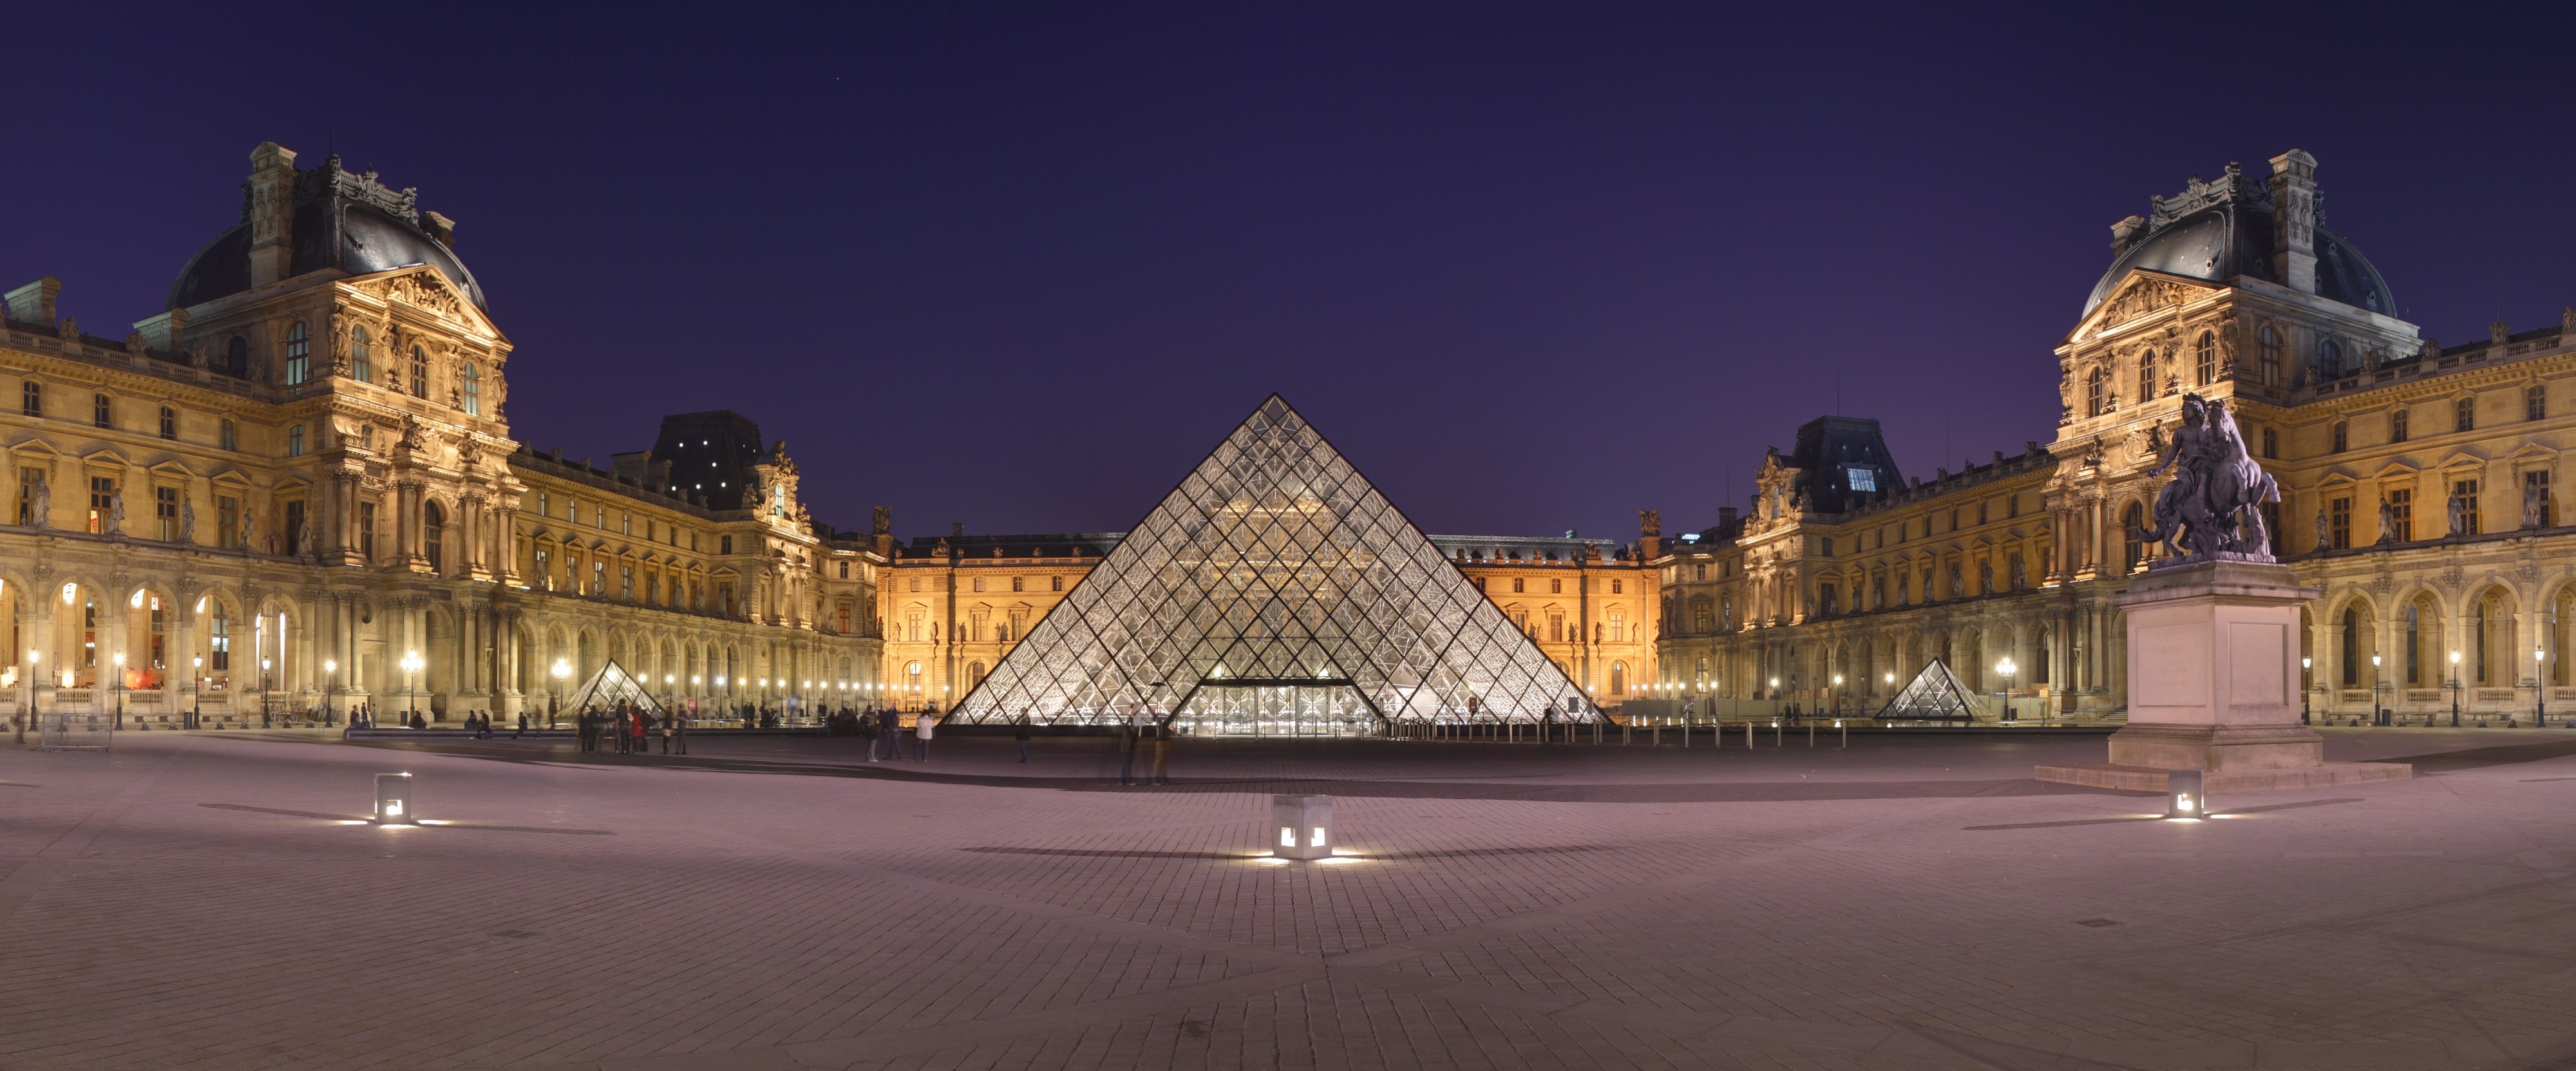 Louvre Museum Wikimedia Commons